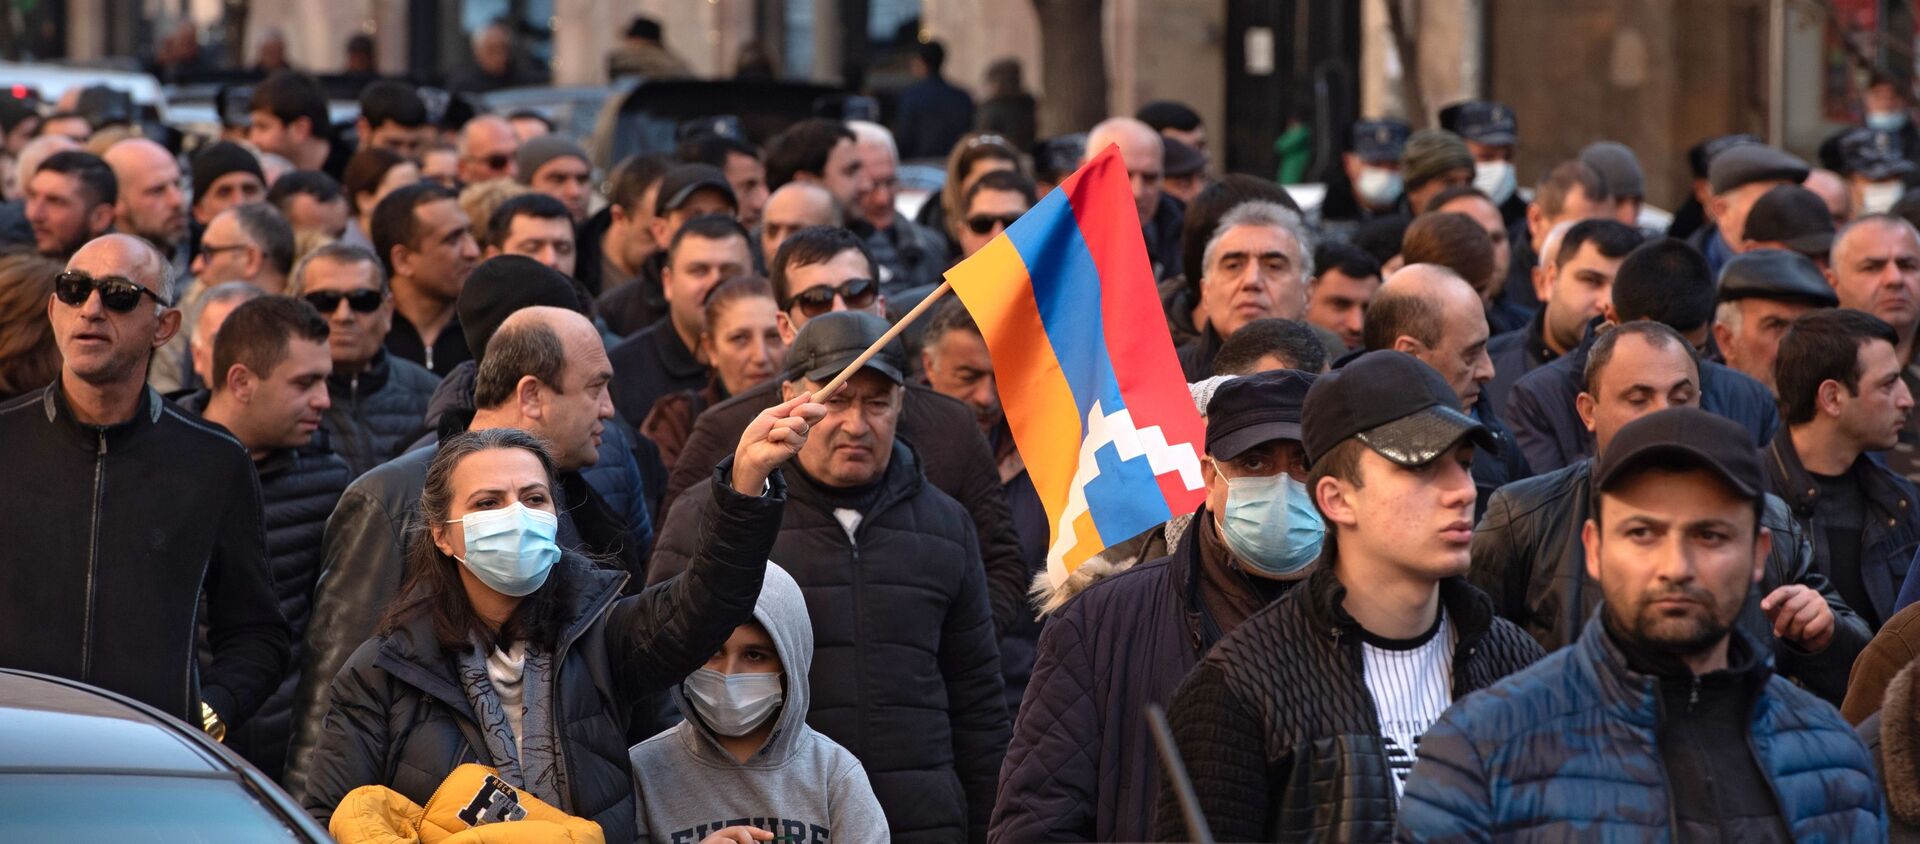 Участники митинга оппозиции в Ереване, Армения - Sputnik Молдова, 1920, 02.03.2021